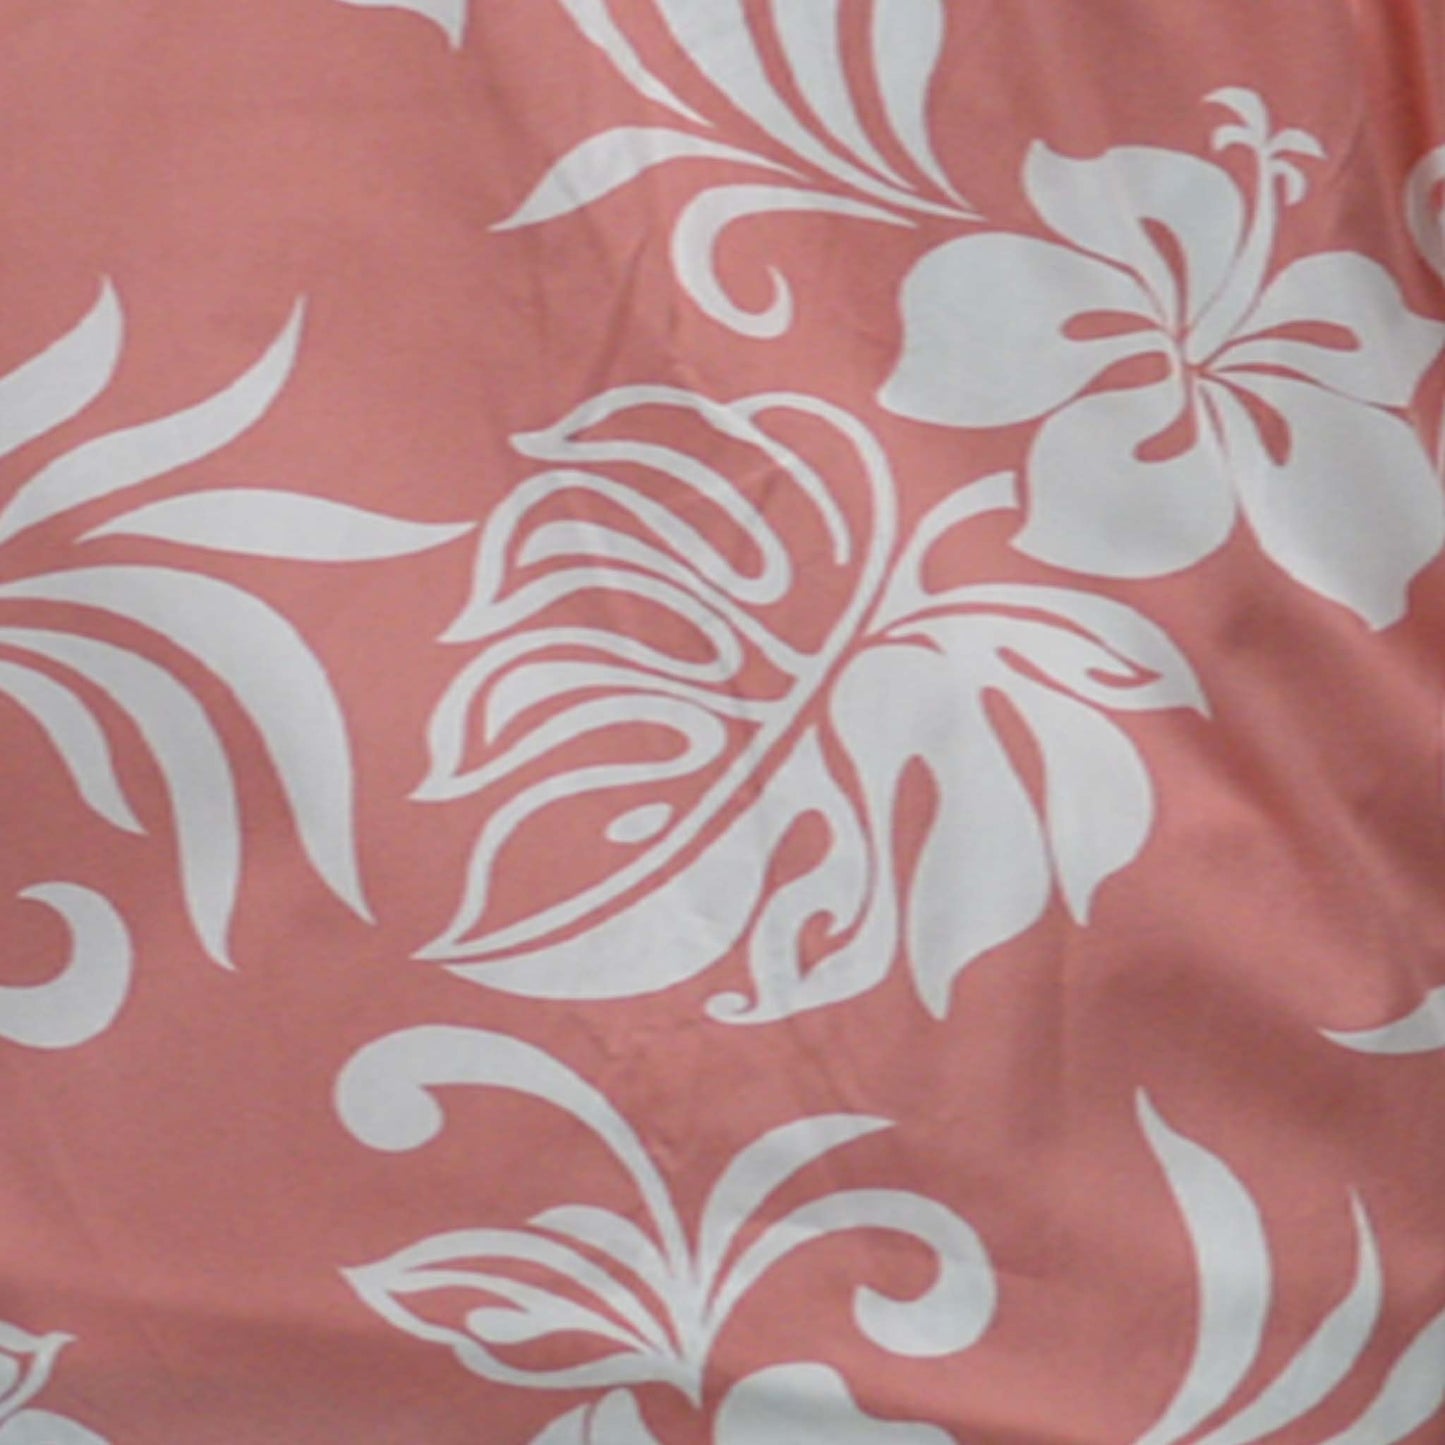 Ky`s Hawaiian Cotton Shirt Classic Hibiscus -Coral